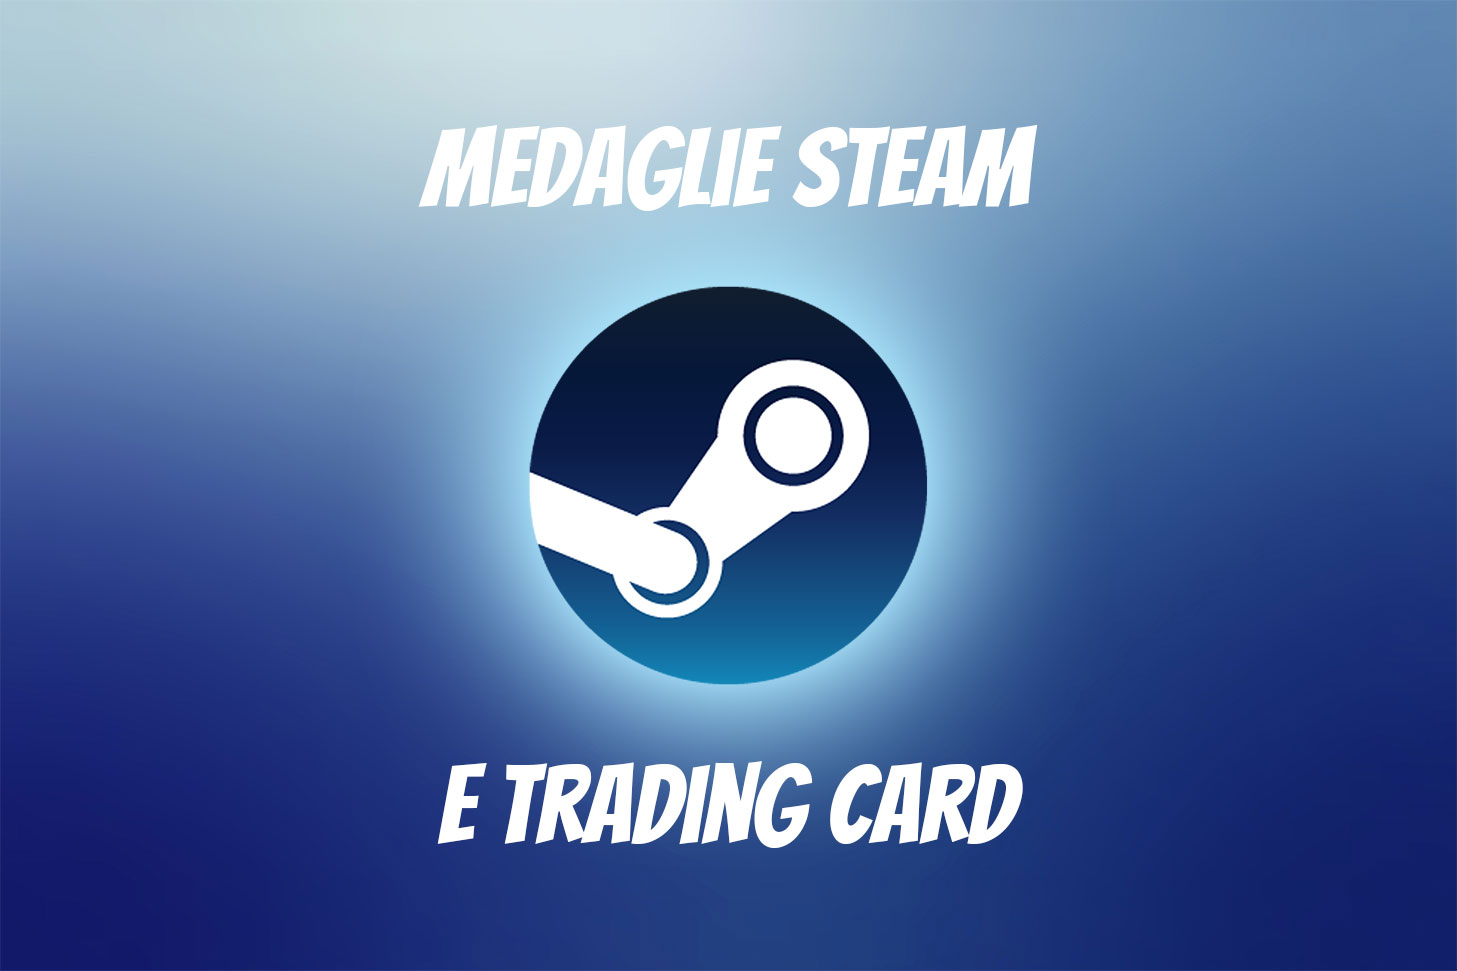 medaglie steam e trading card